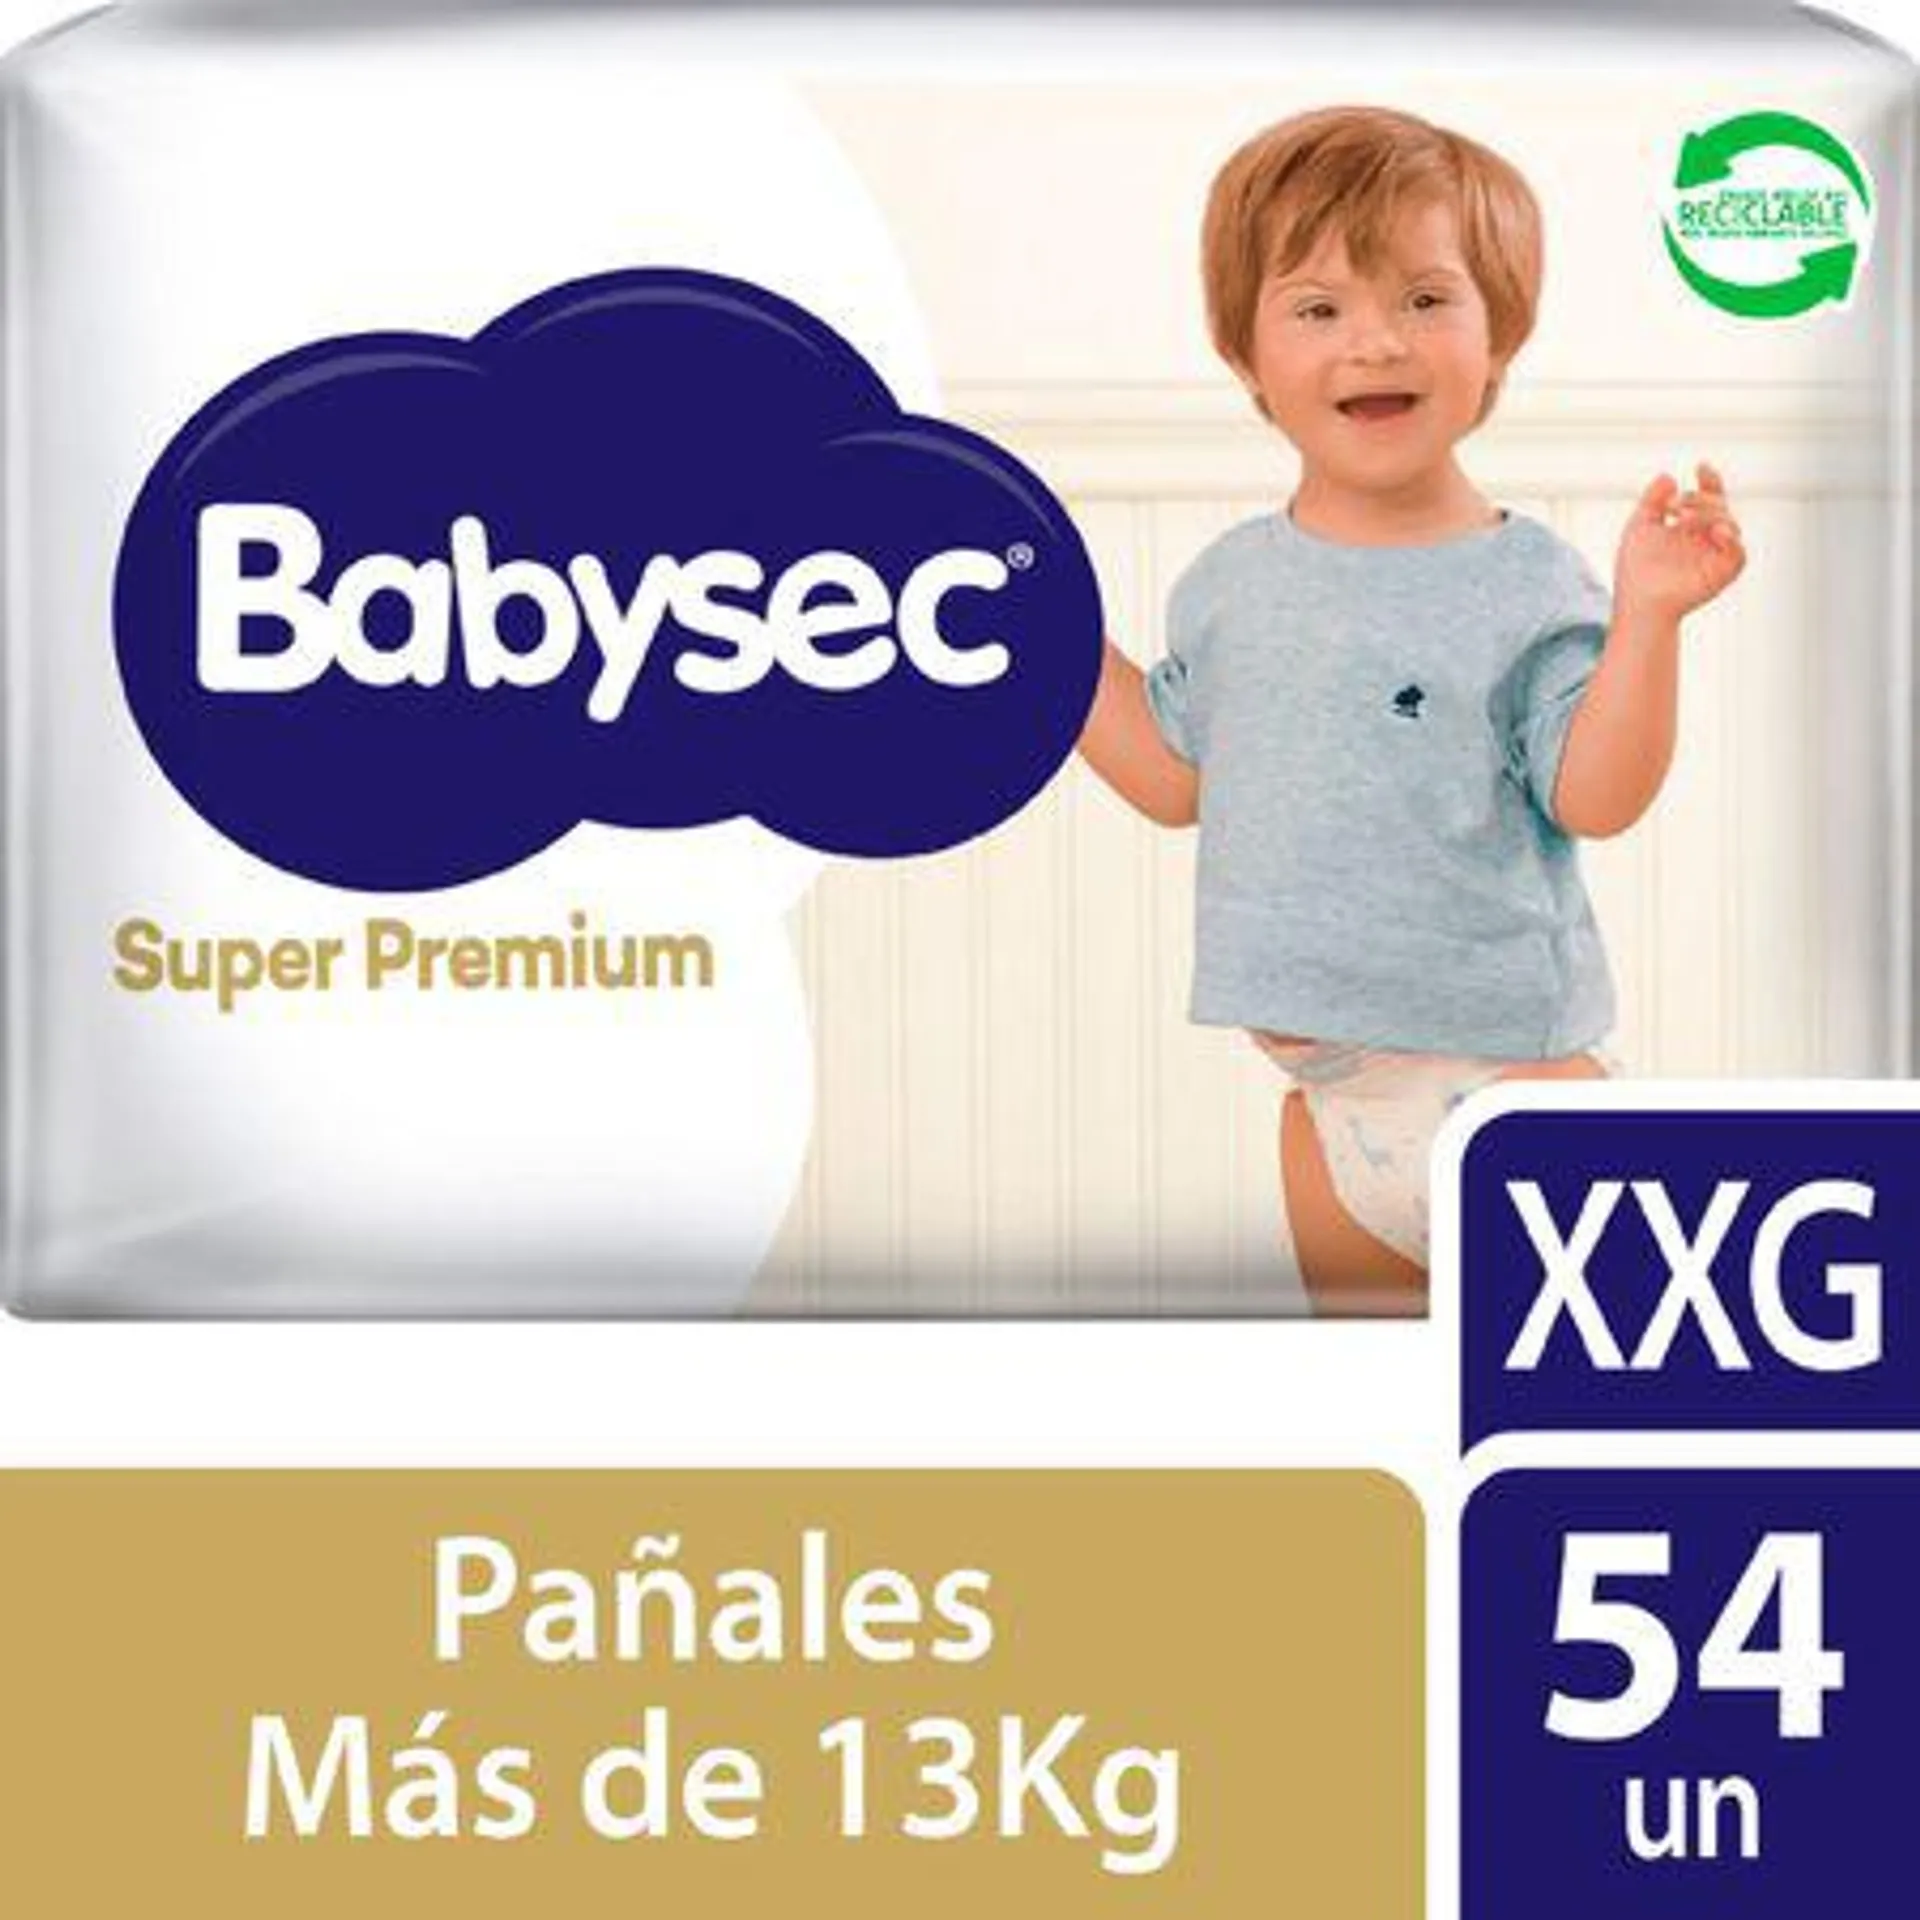 Pañales Babysec Super Premium Talla XXG 54 un.